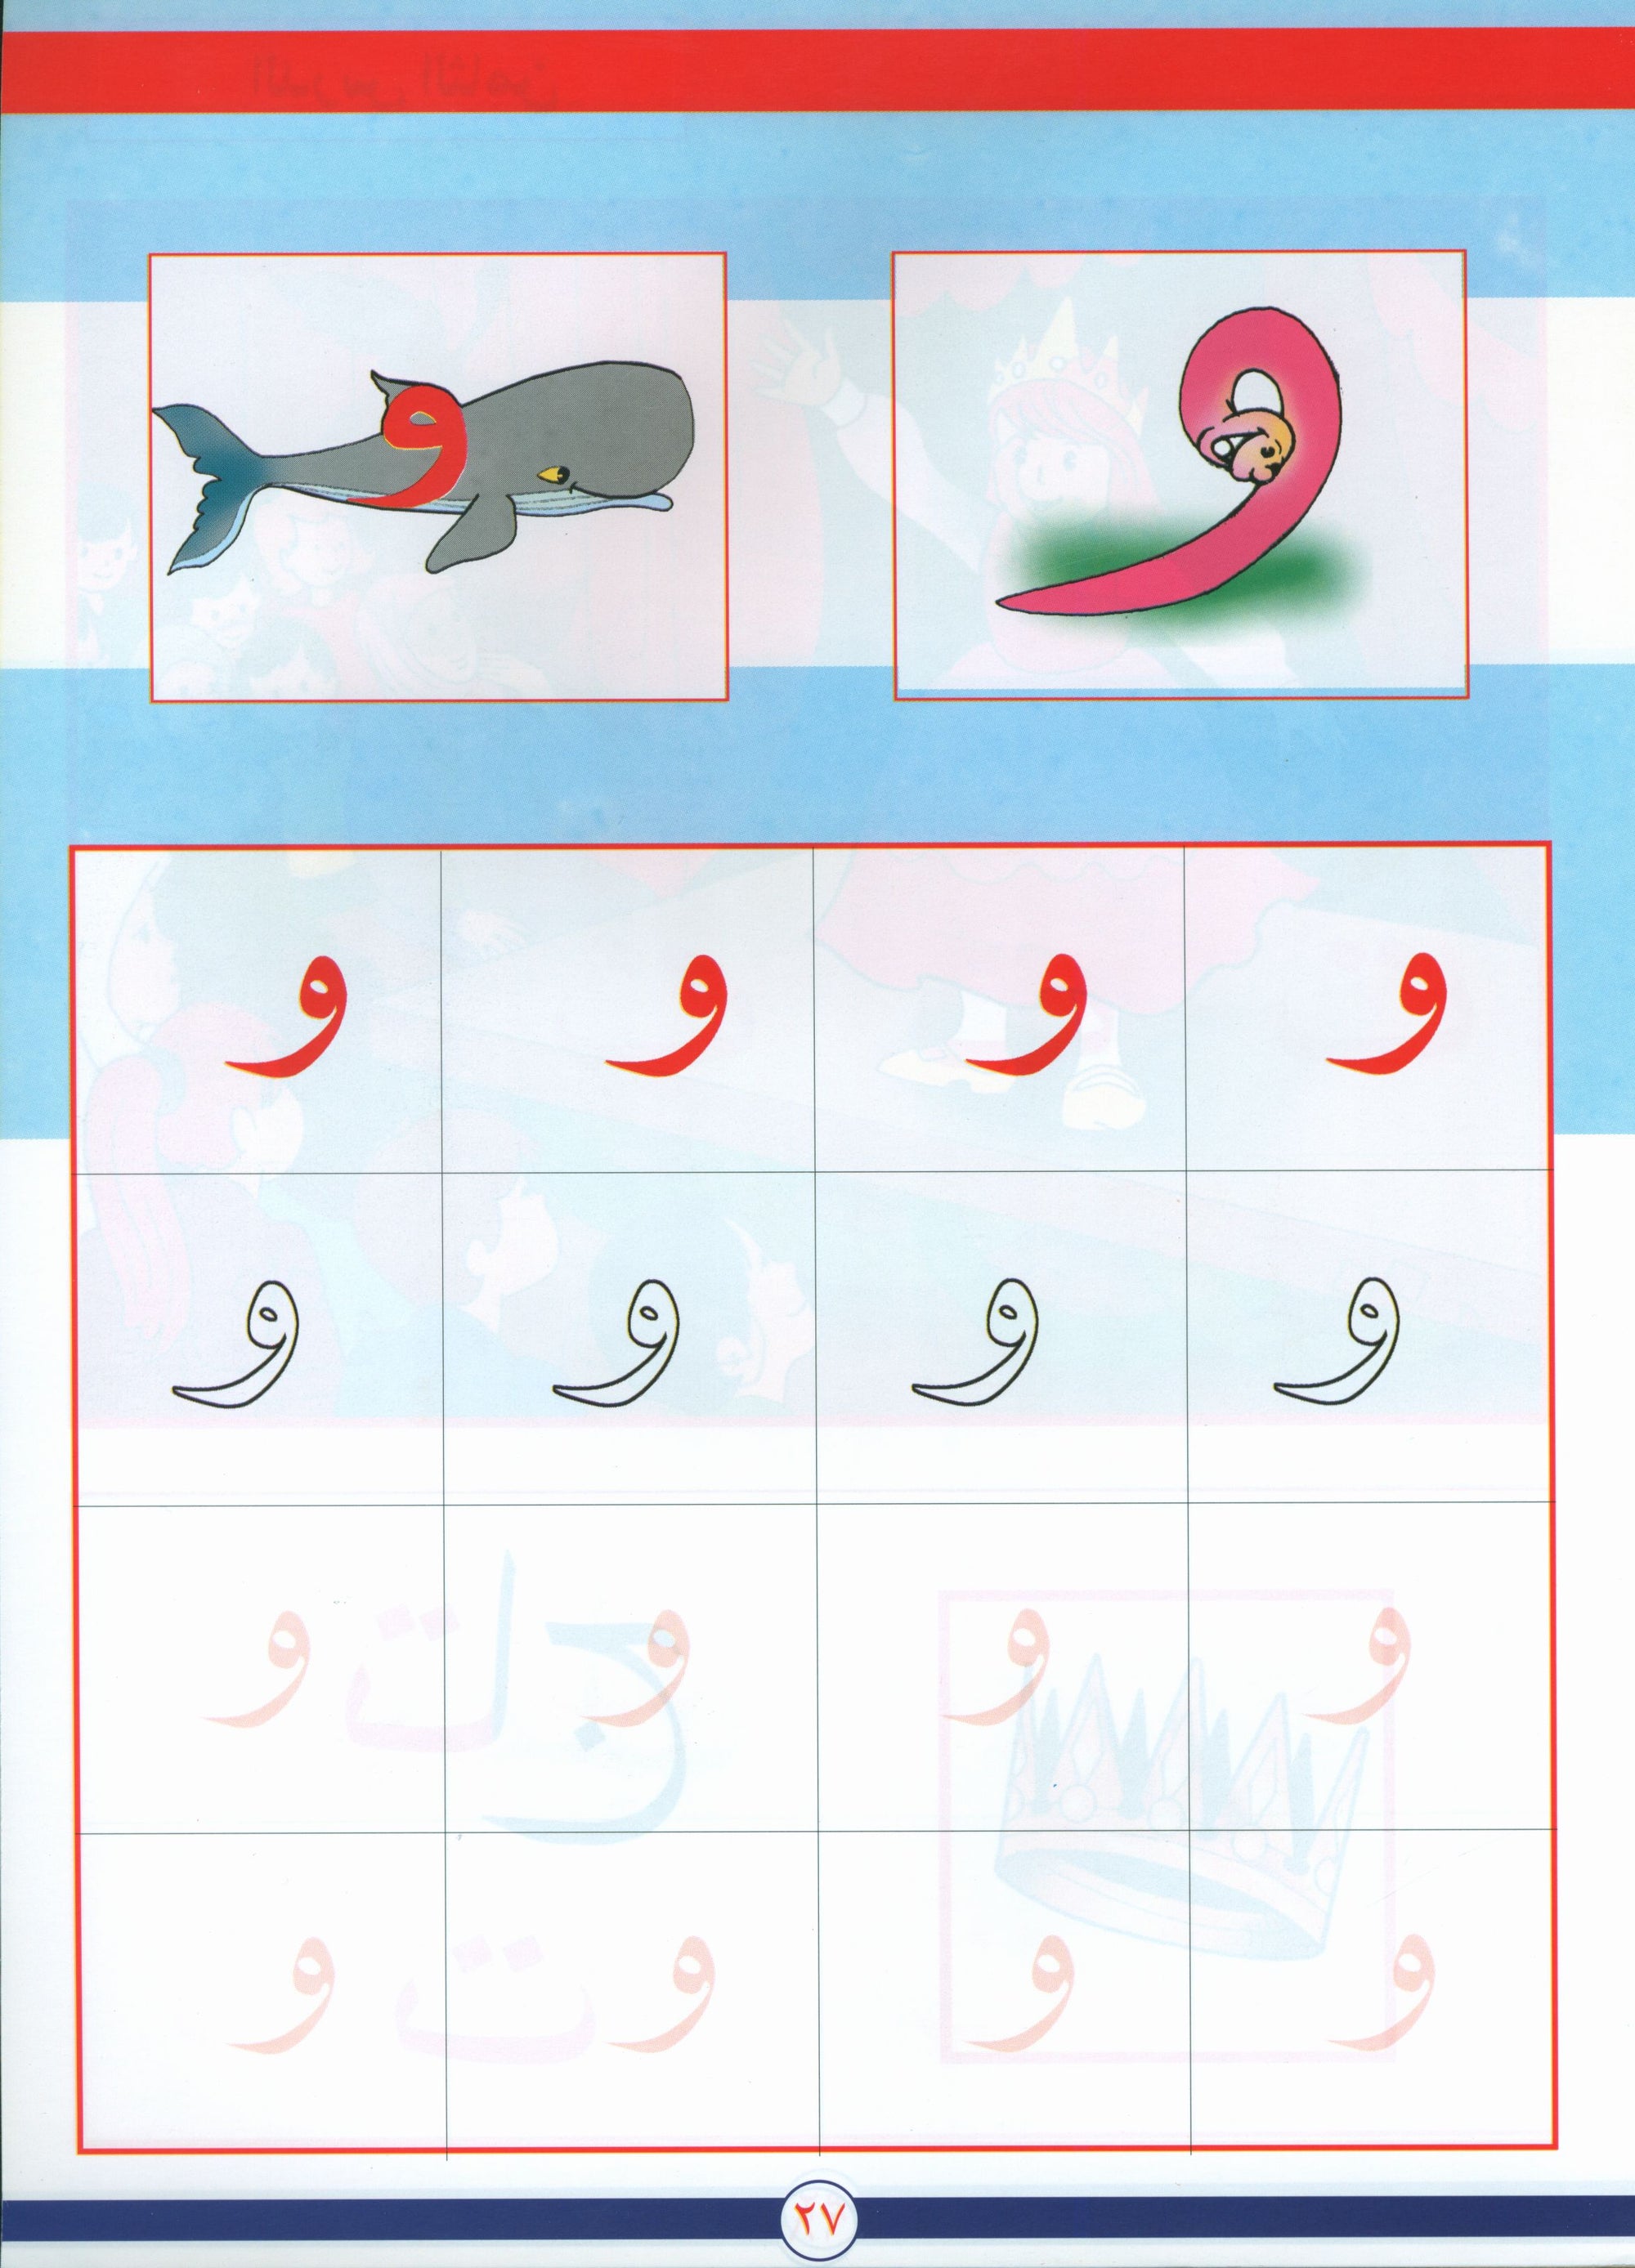 Hurry to Arabic Language PreK 1 هيا الى العربية بستان